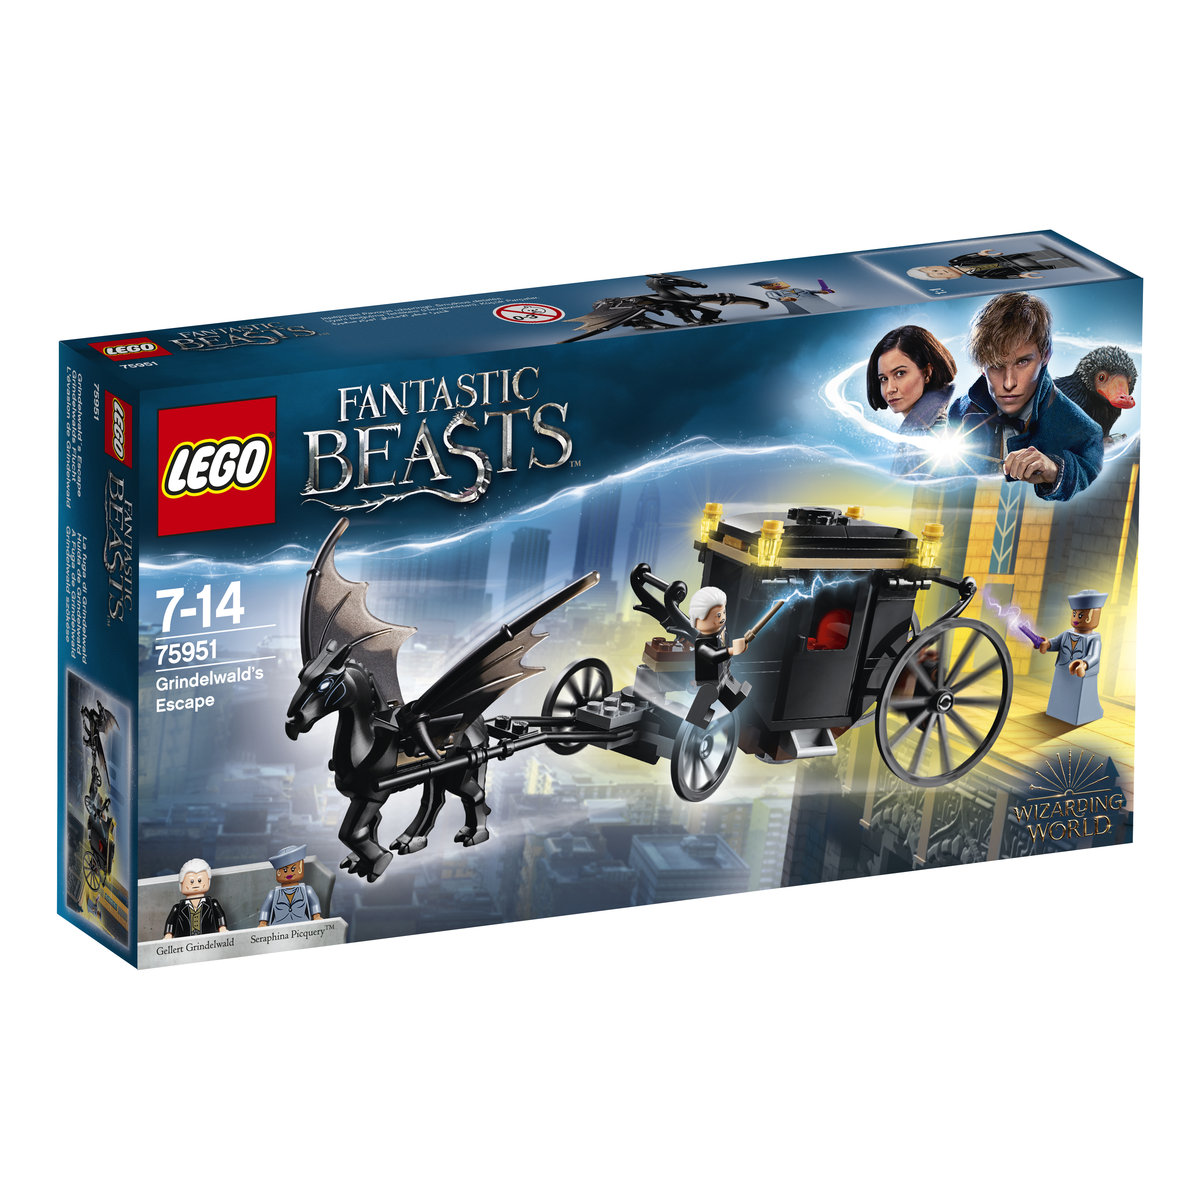 LEGO Harry Potter Ucieczka Grindelwalda 75951